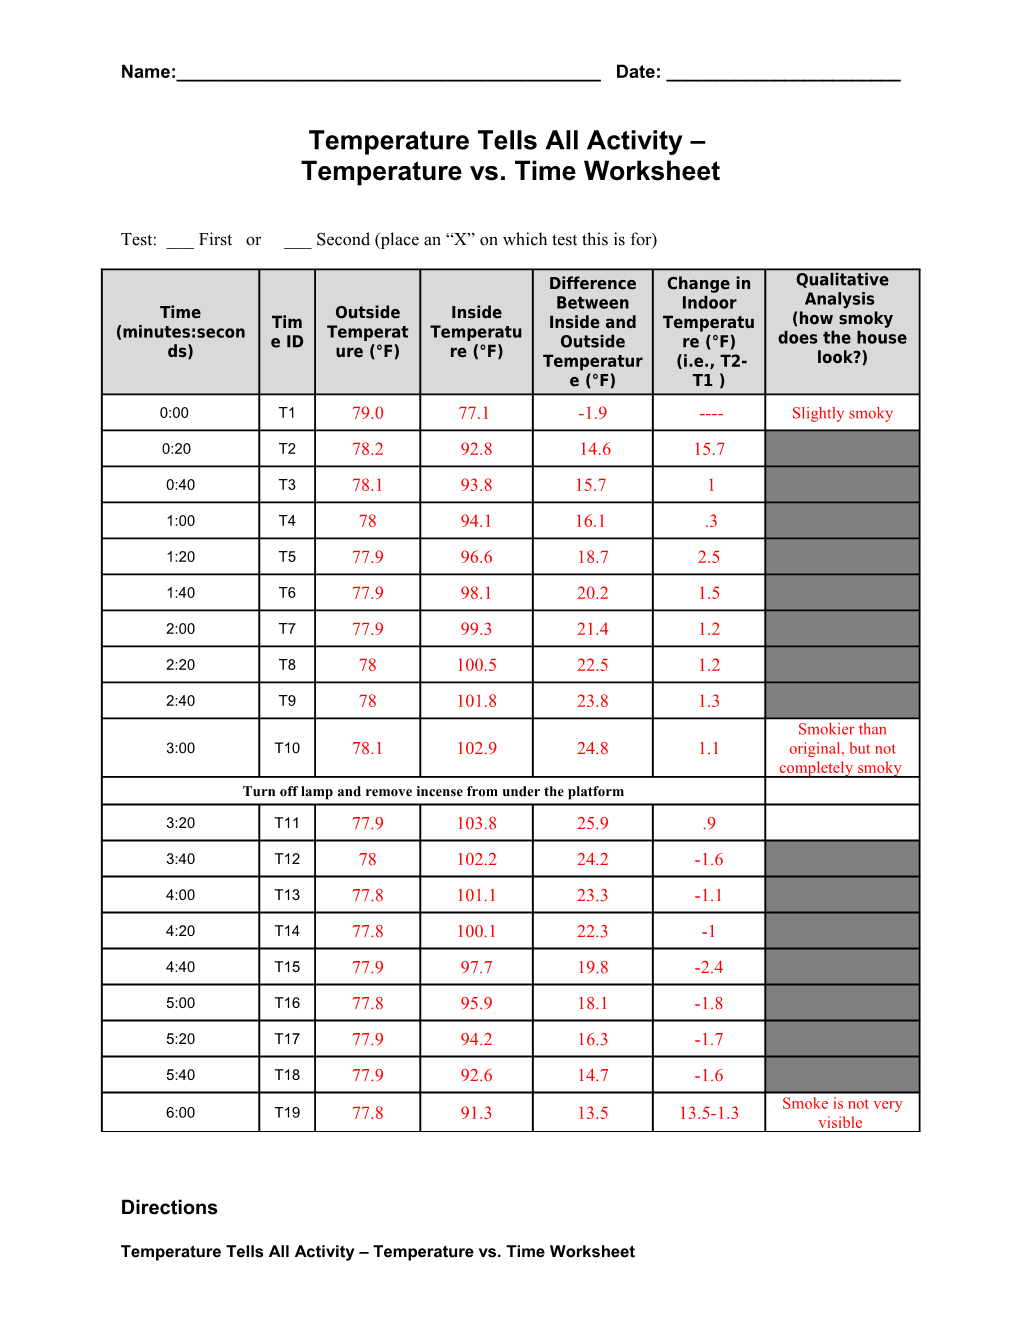 Temperature Tells All Activity Temperature Vs. Time Worksheet